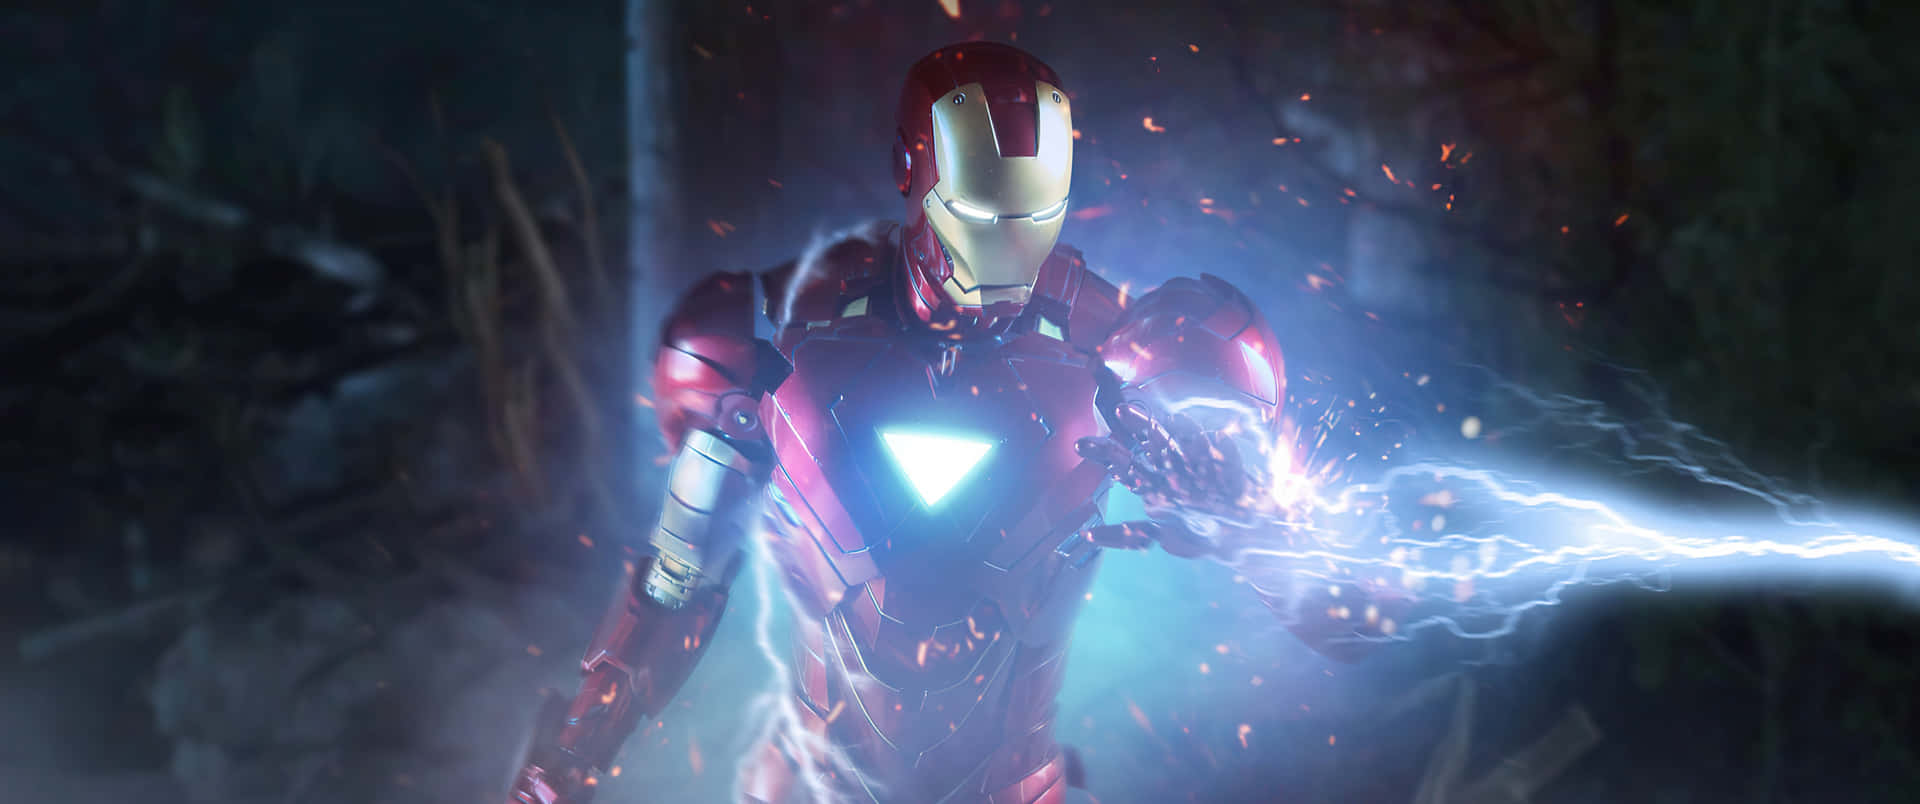 Iron Man Energy Blast Super Ultra Wide Wallpaper